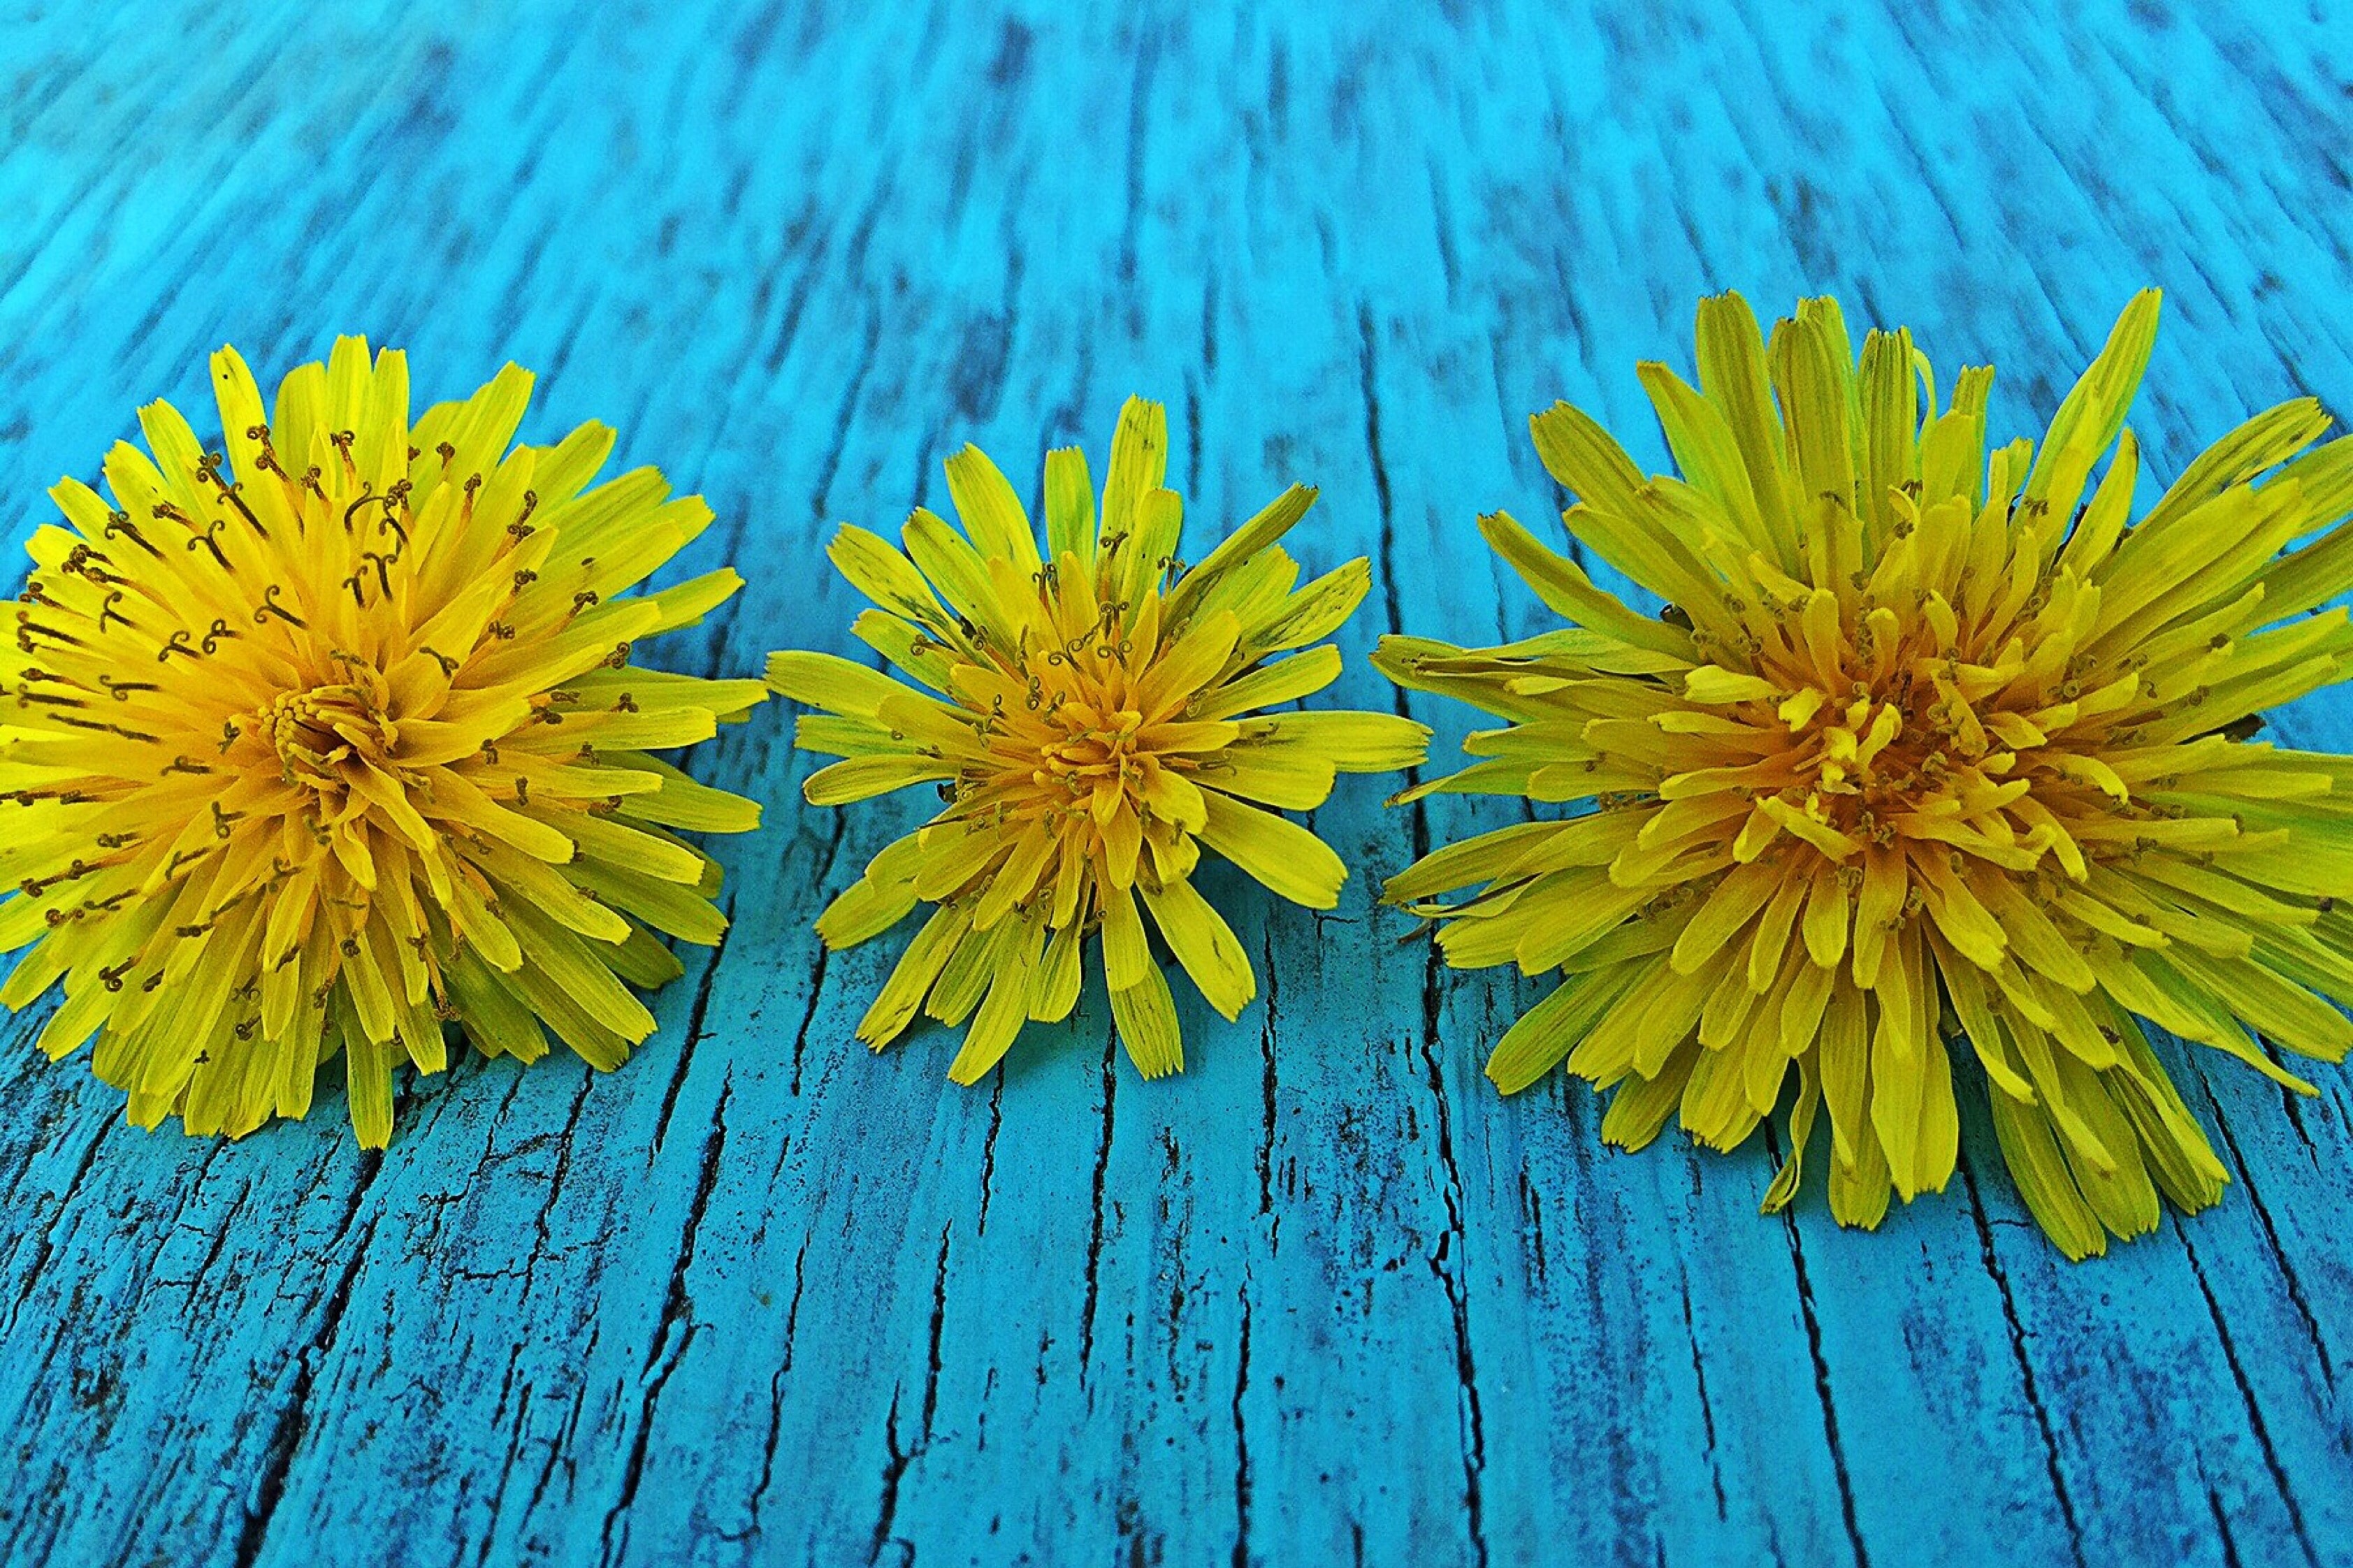 yellow petaled flowers